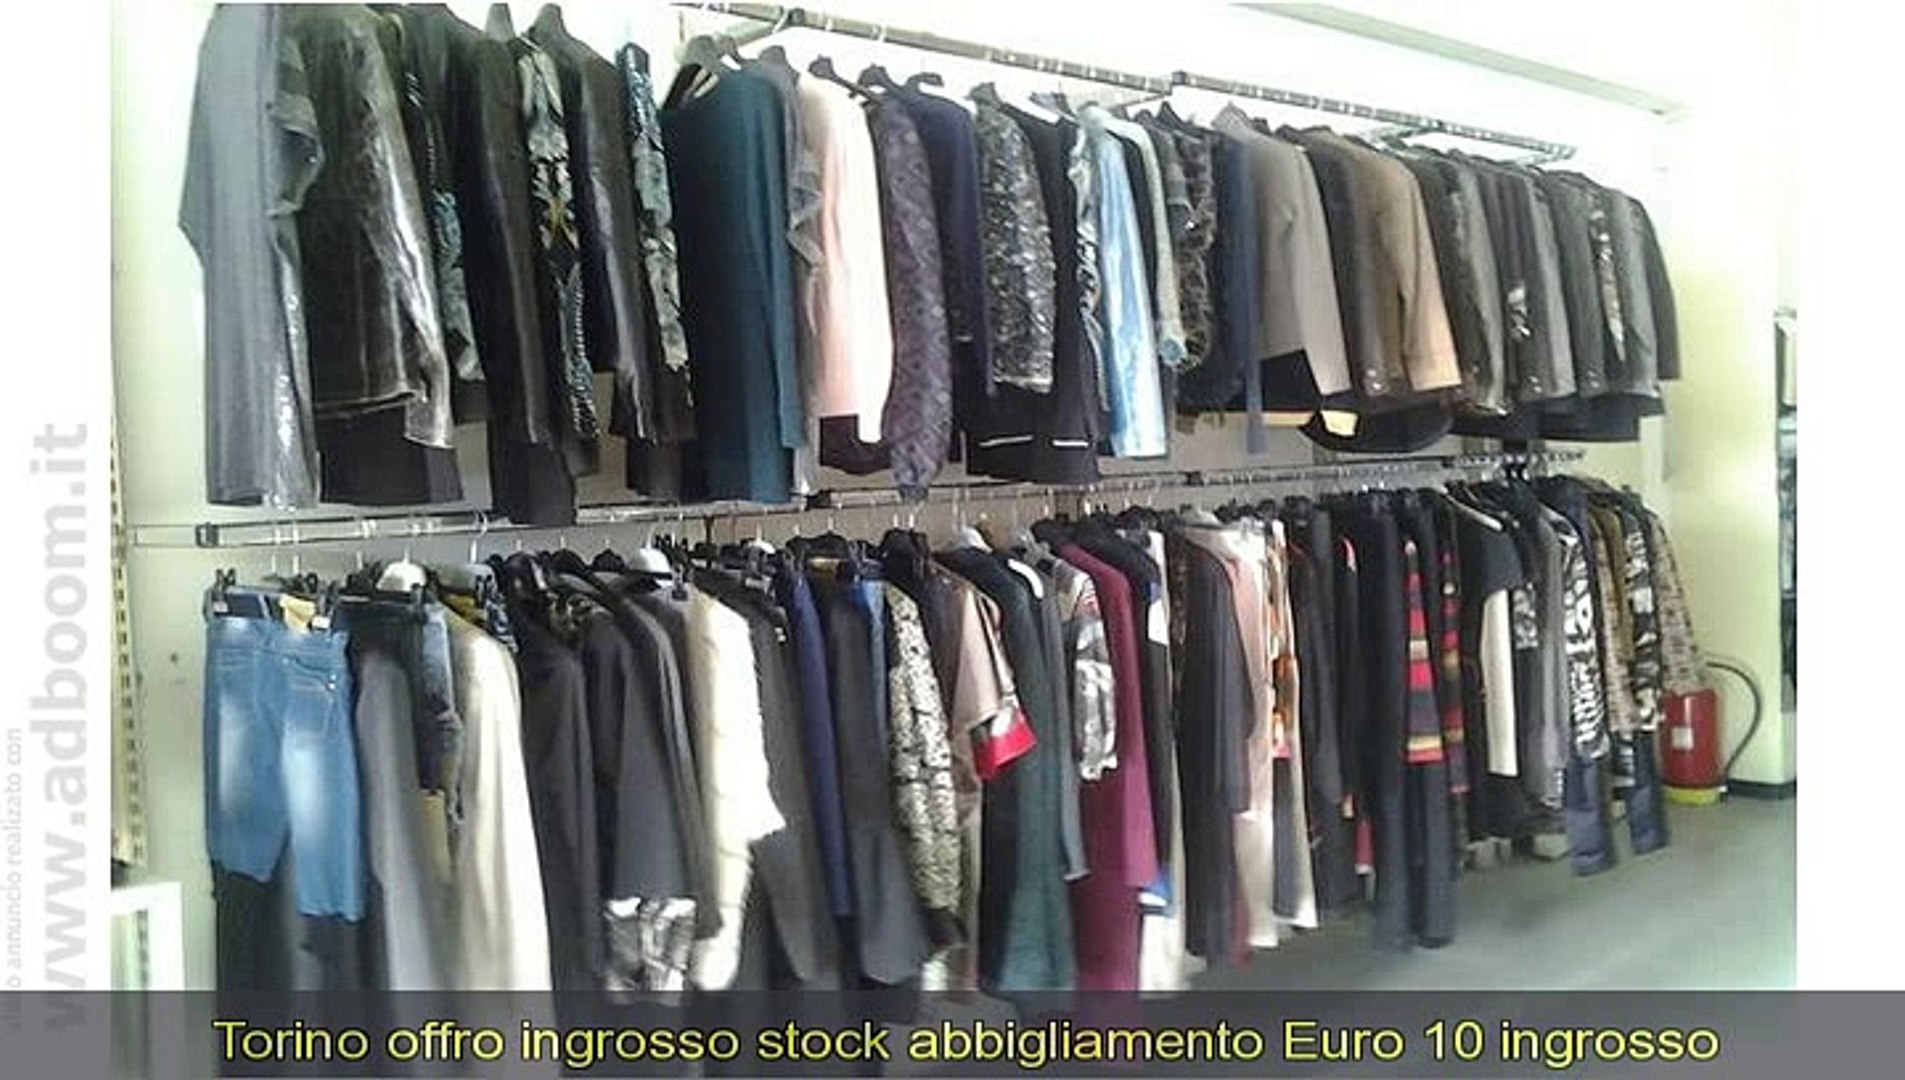 TORINO, INGROSSO STOCK ABBIGLIAMENTO EURO 10 - Video Dailymotion